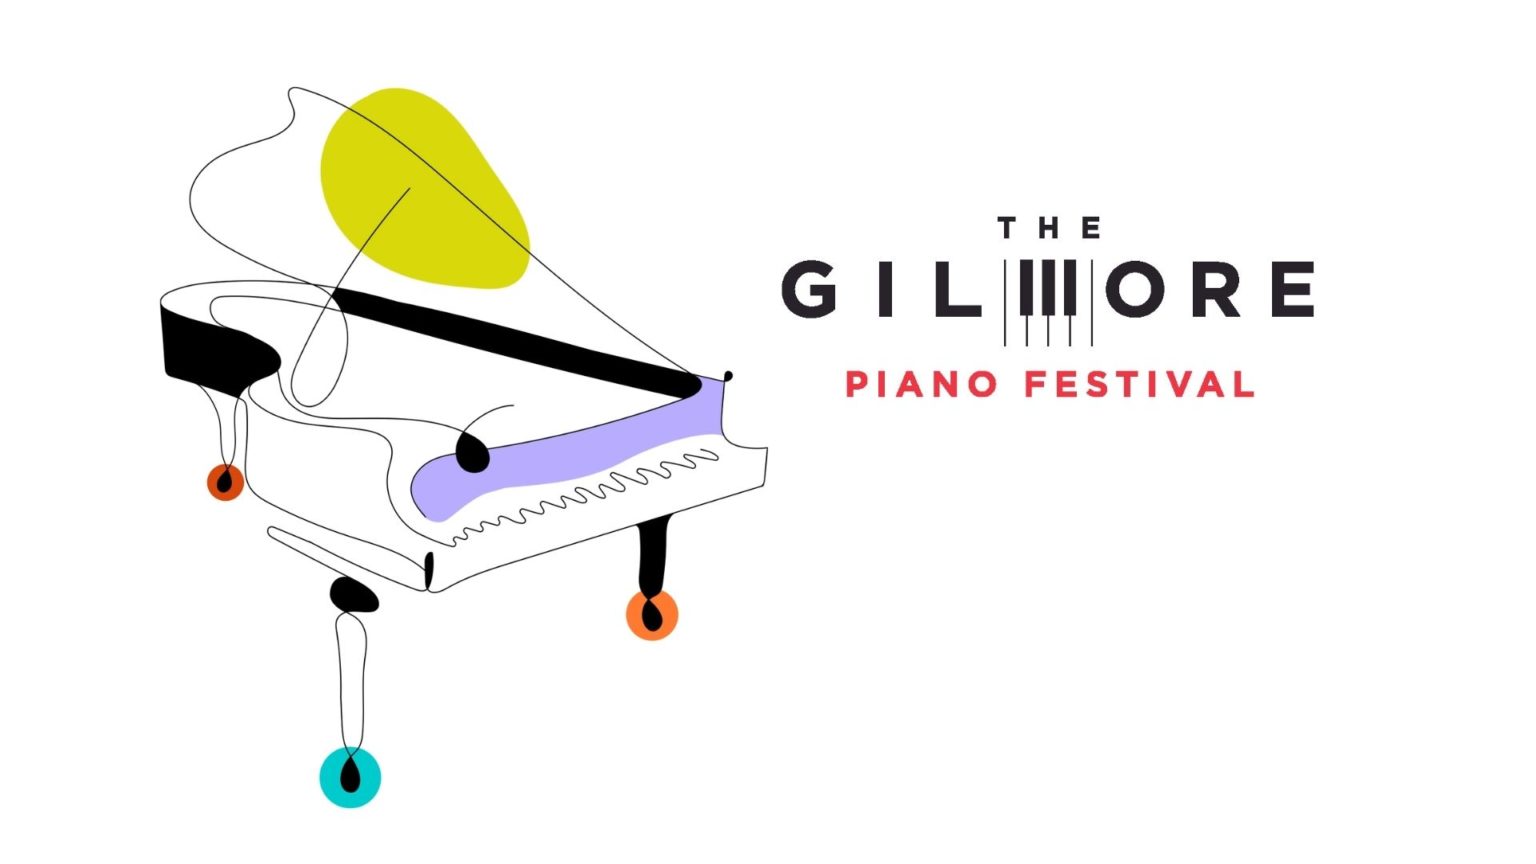 Announcing the 2022 Gilmore Piano Festival The Gilmore